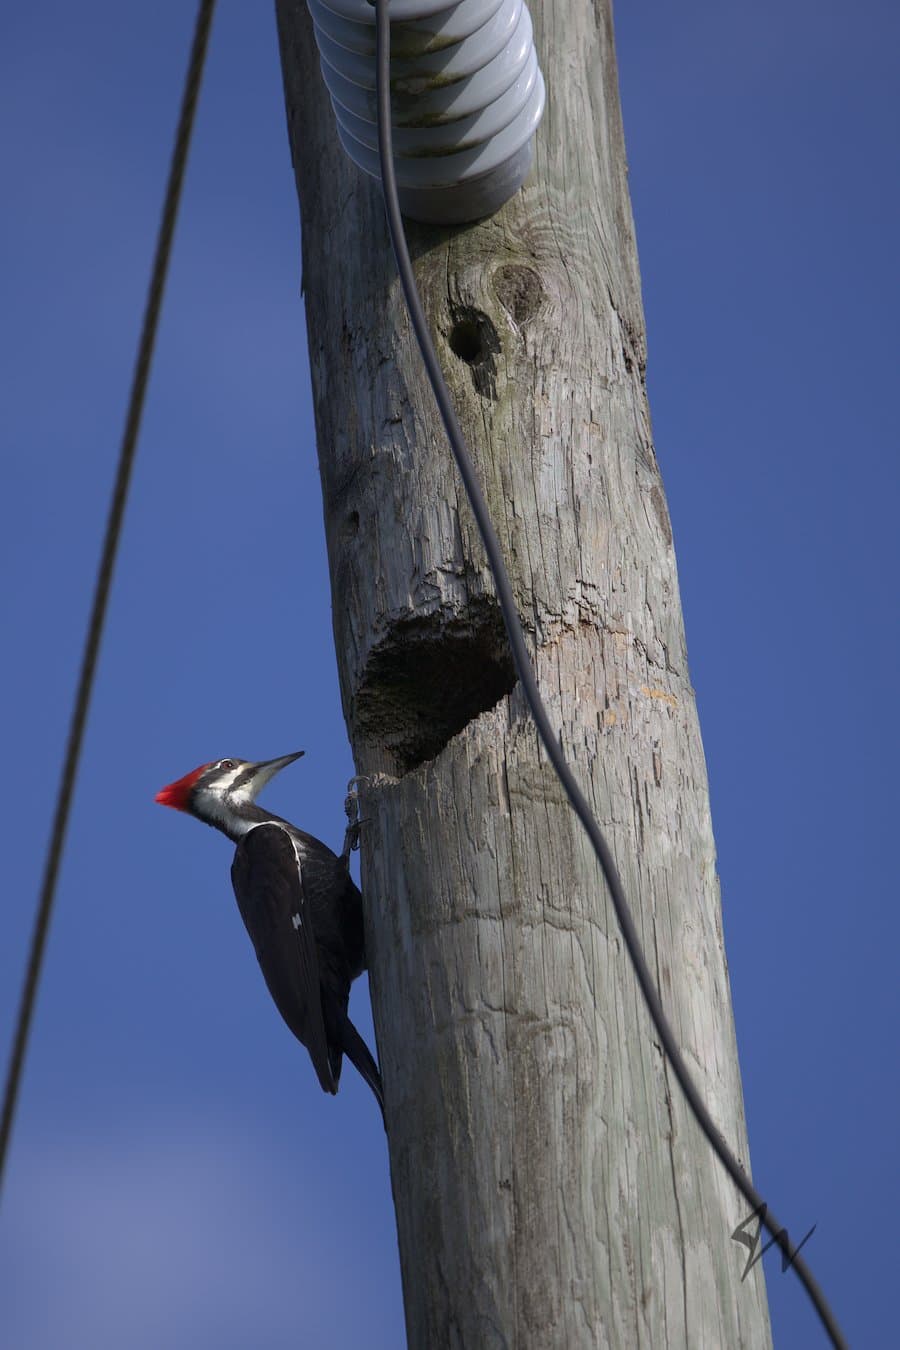 Female Pileated Woodpecker exploring huge hole near top of telephone pole.